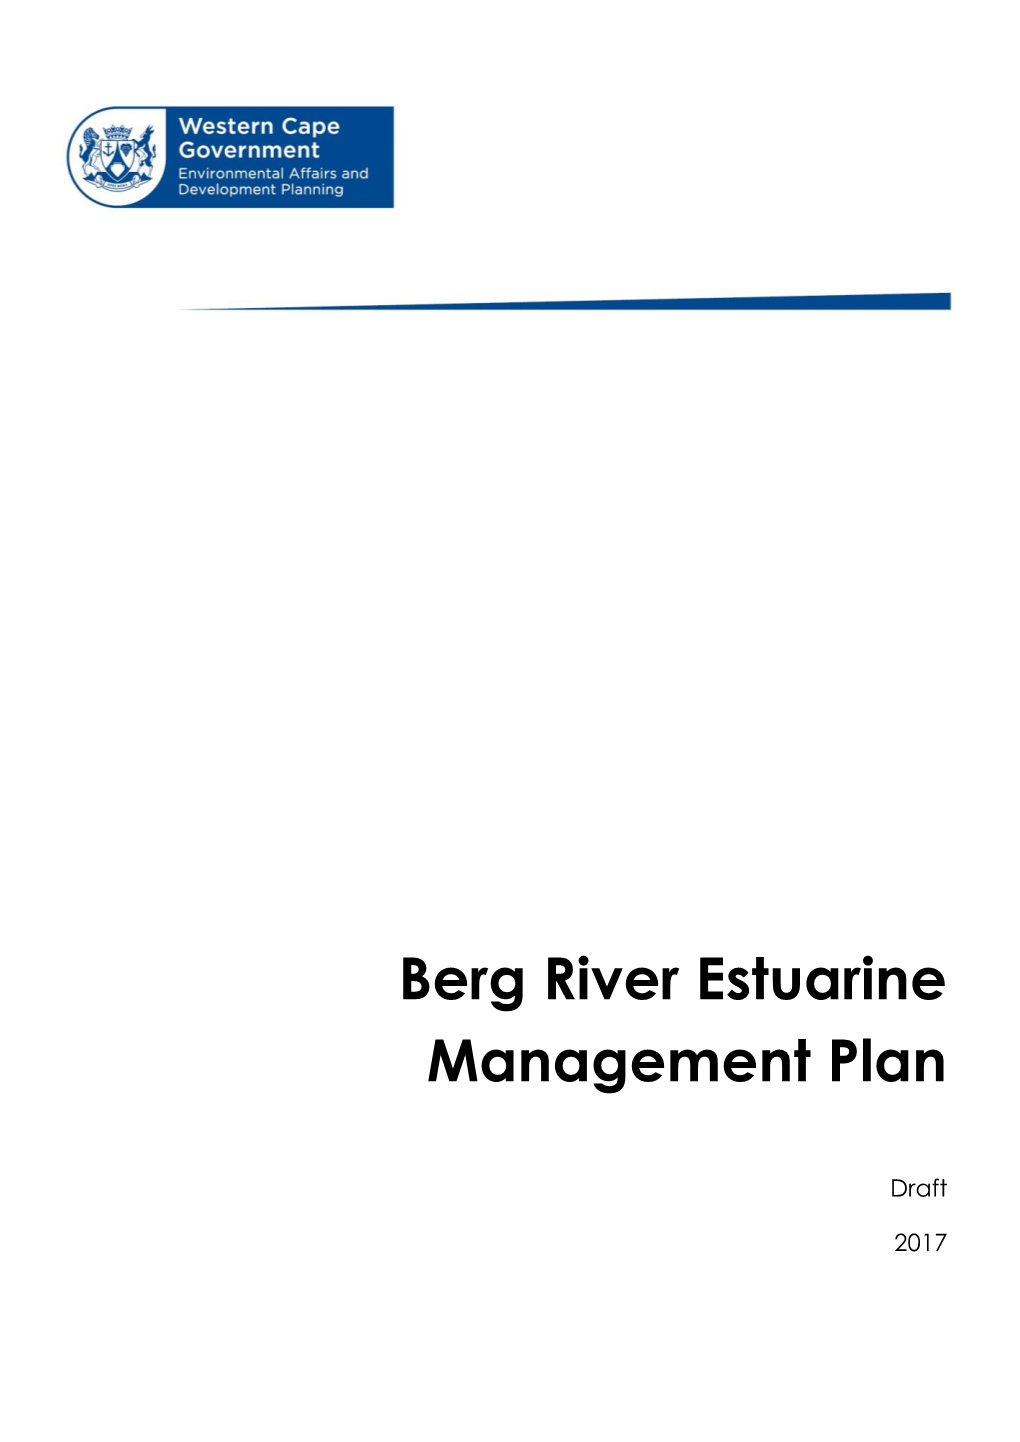 Berg River Estuarine Management Plan